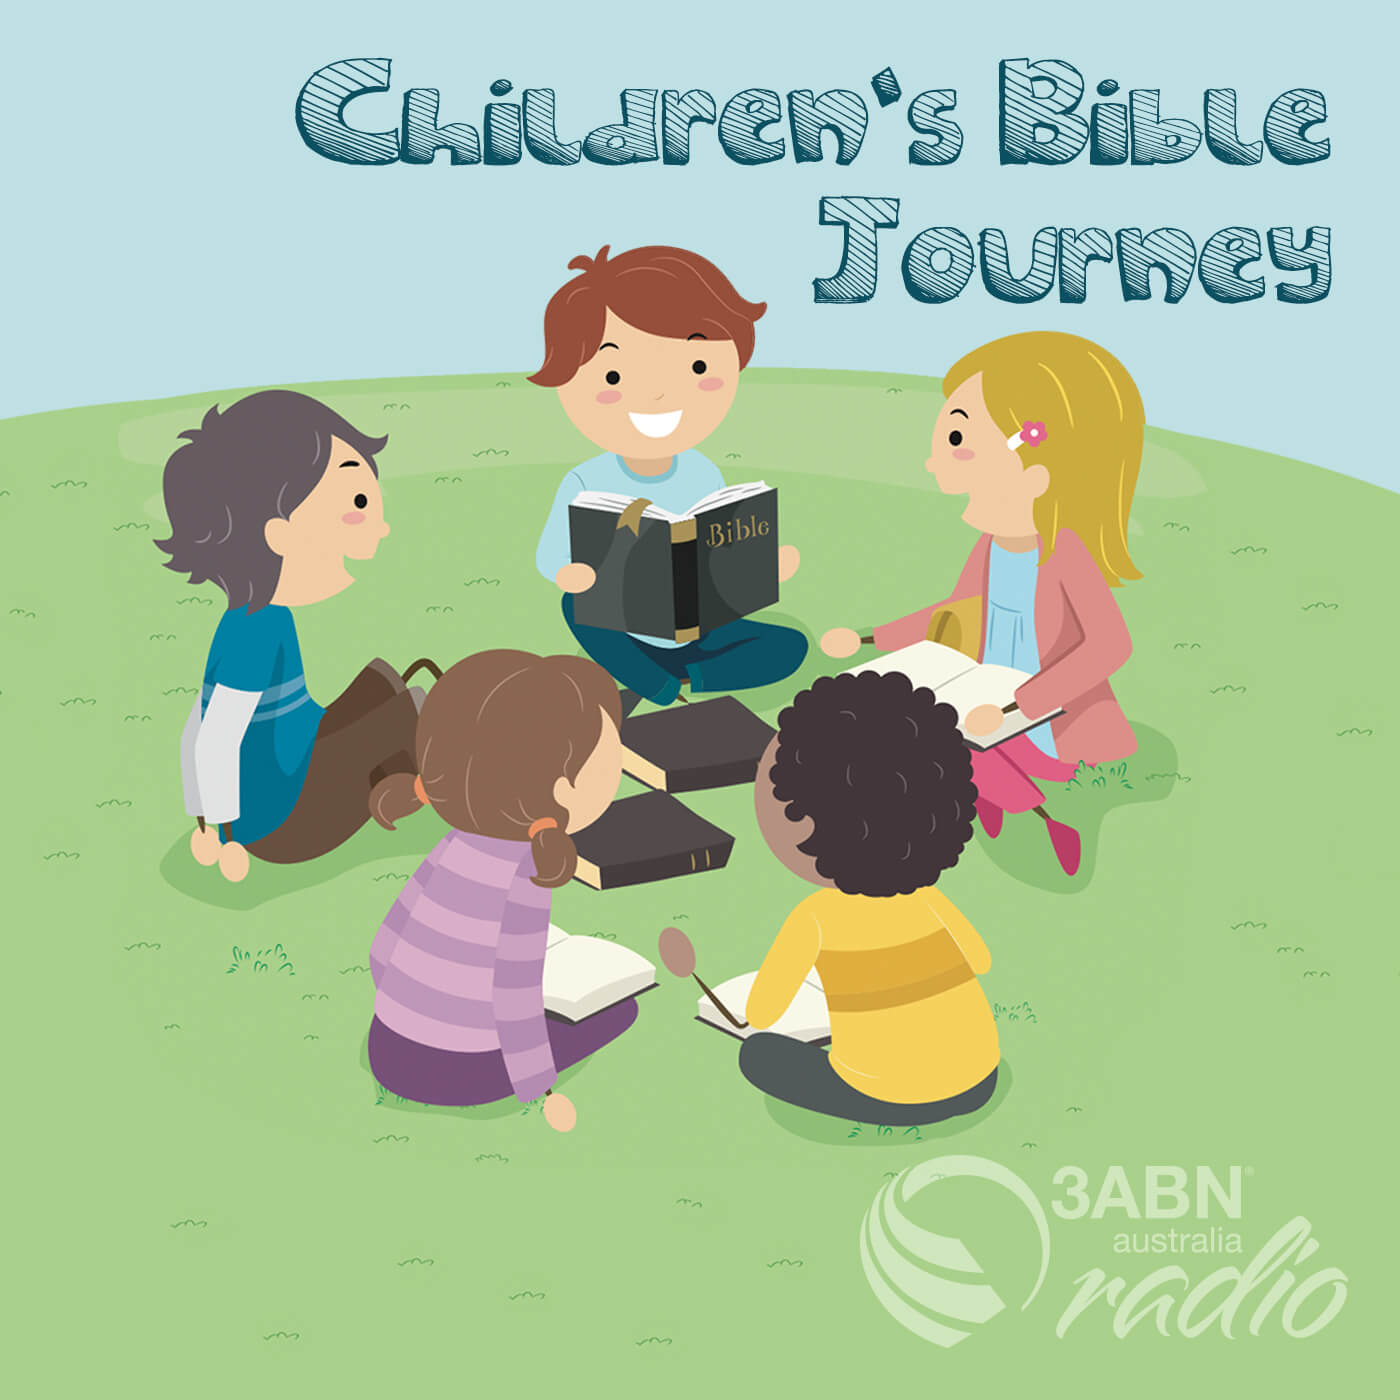 Children's Bible Journey - 2219